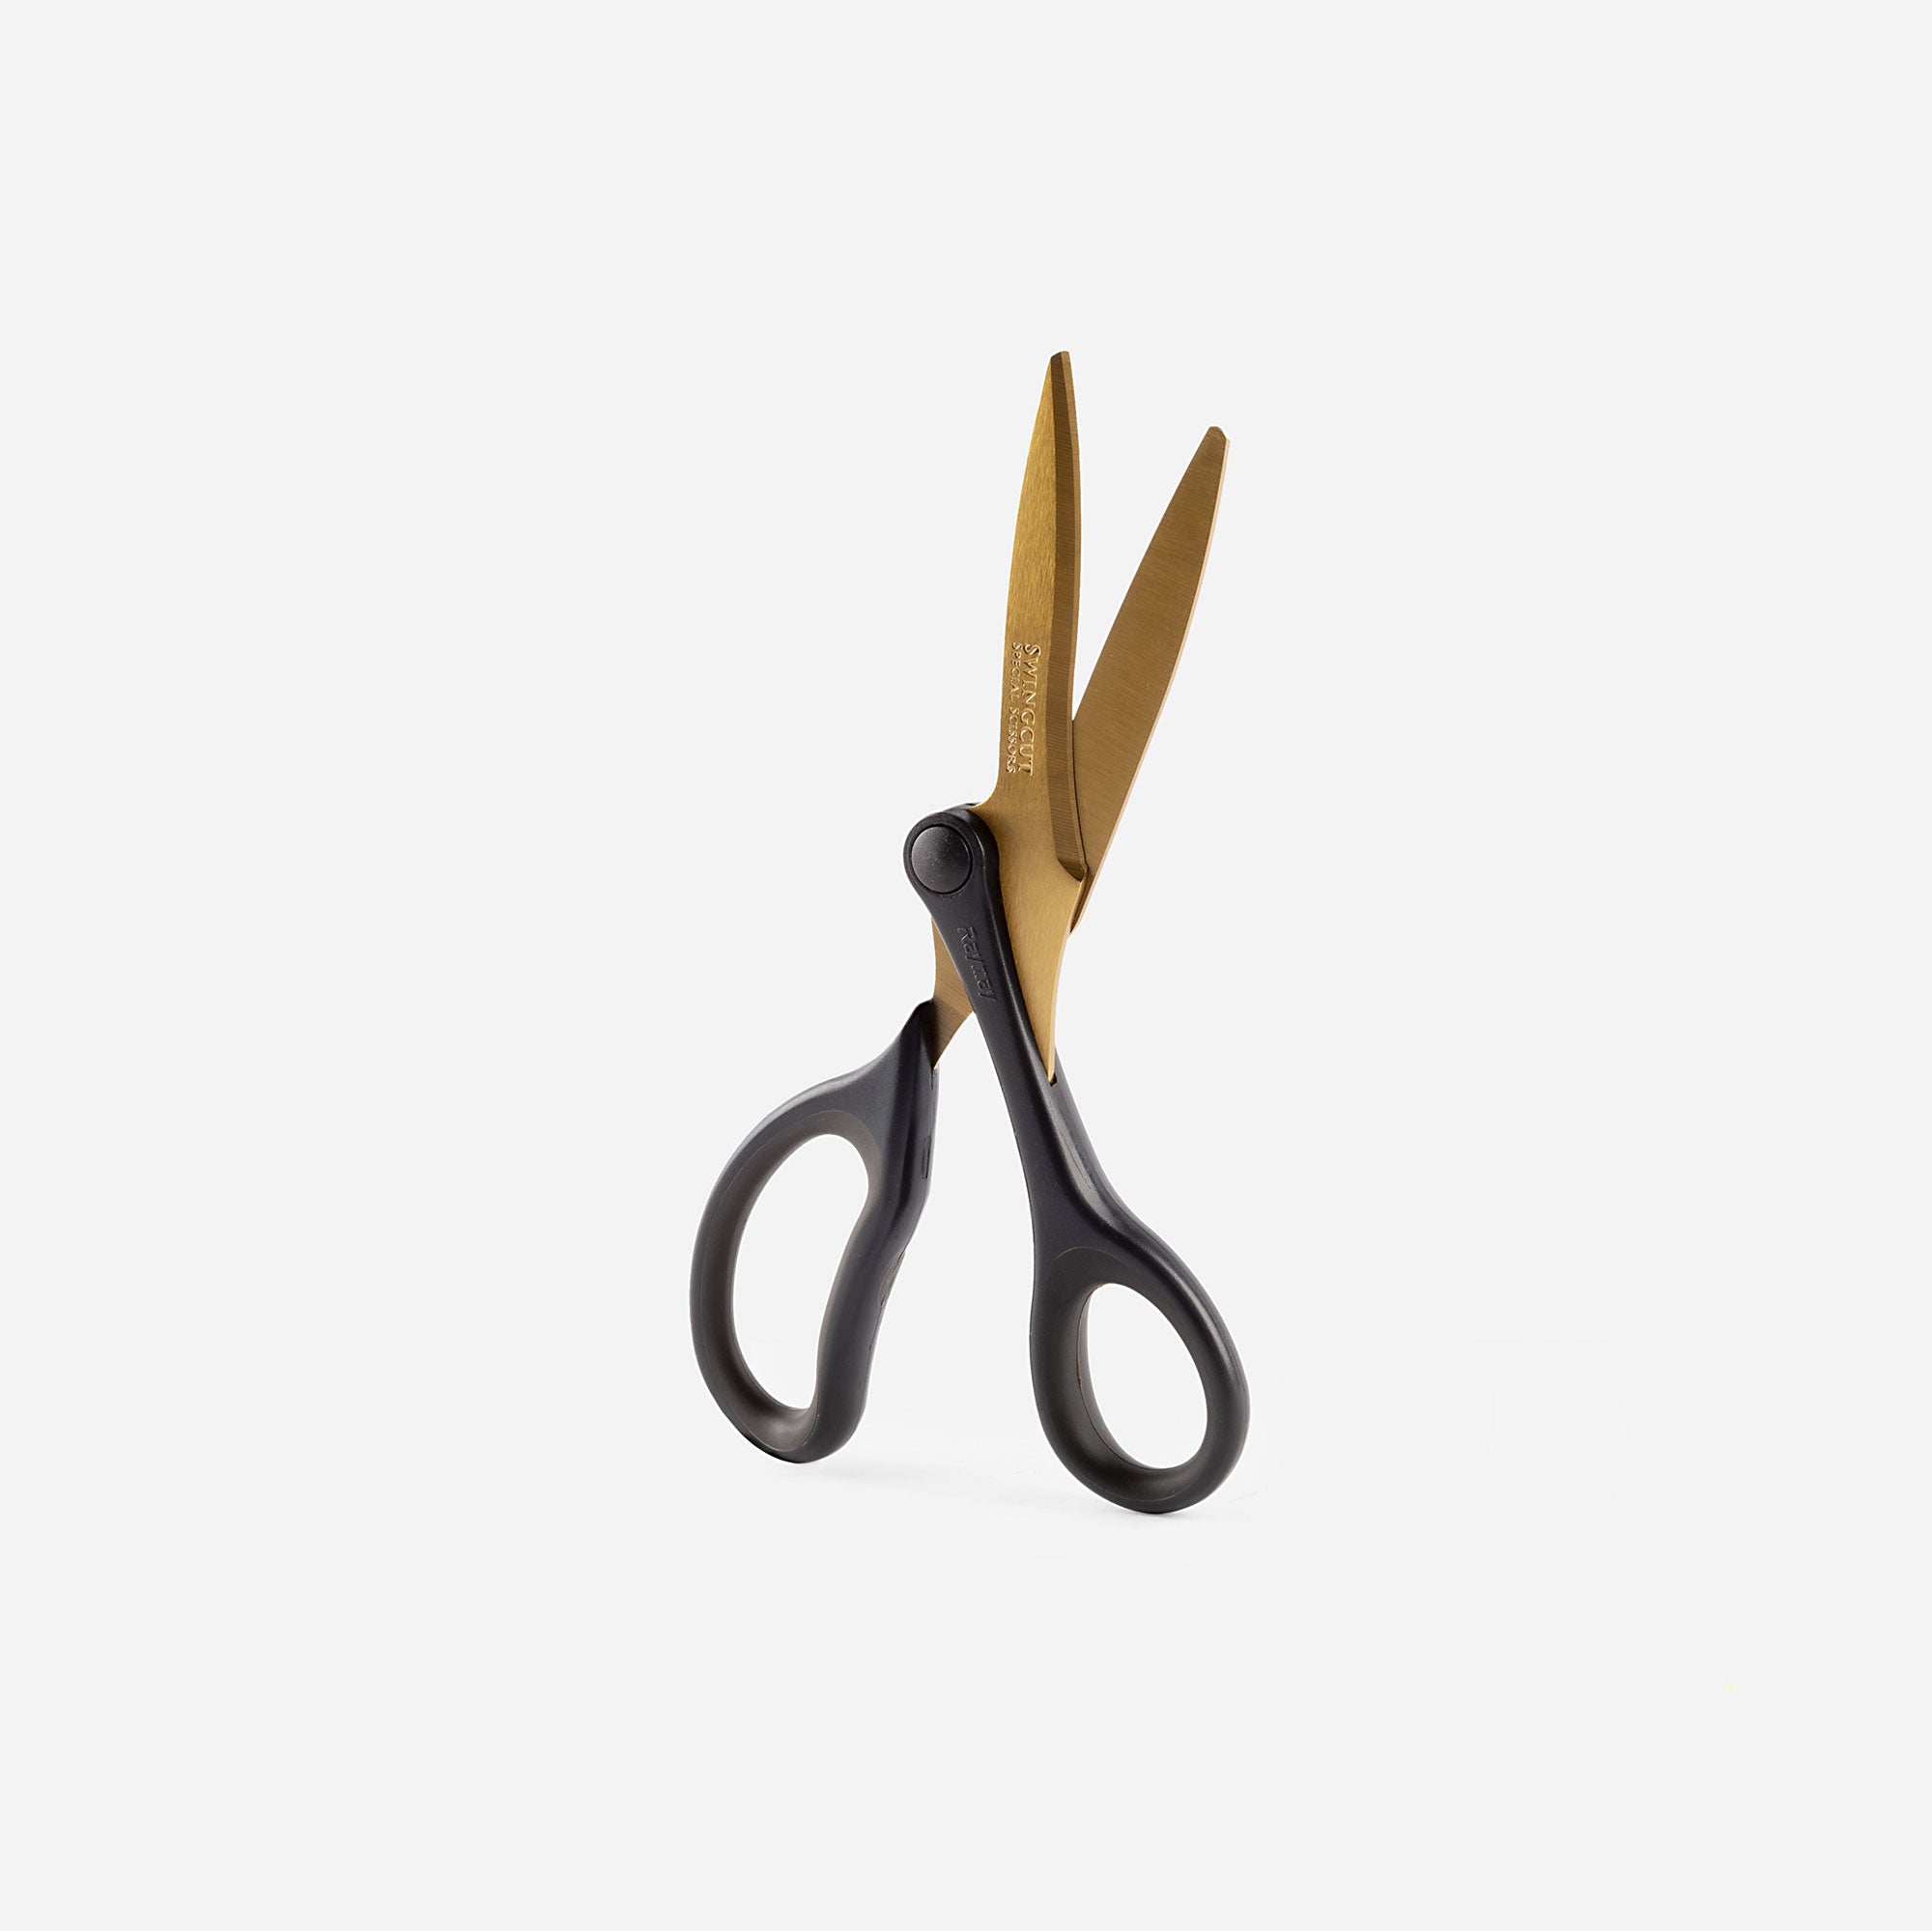 Swingcut scissors